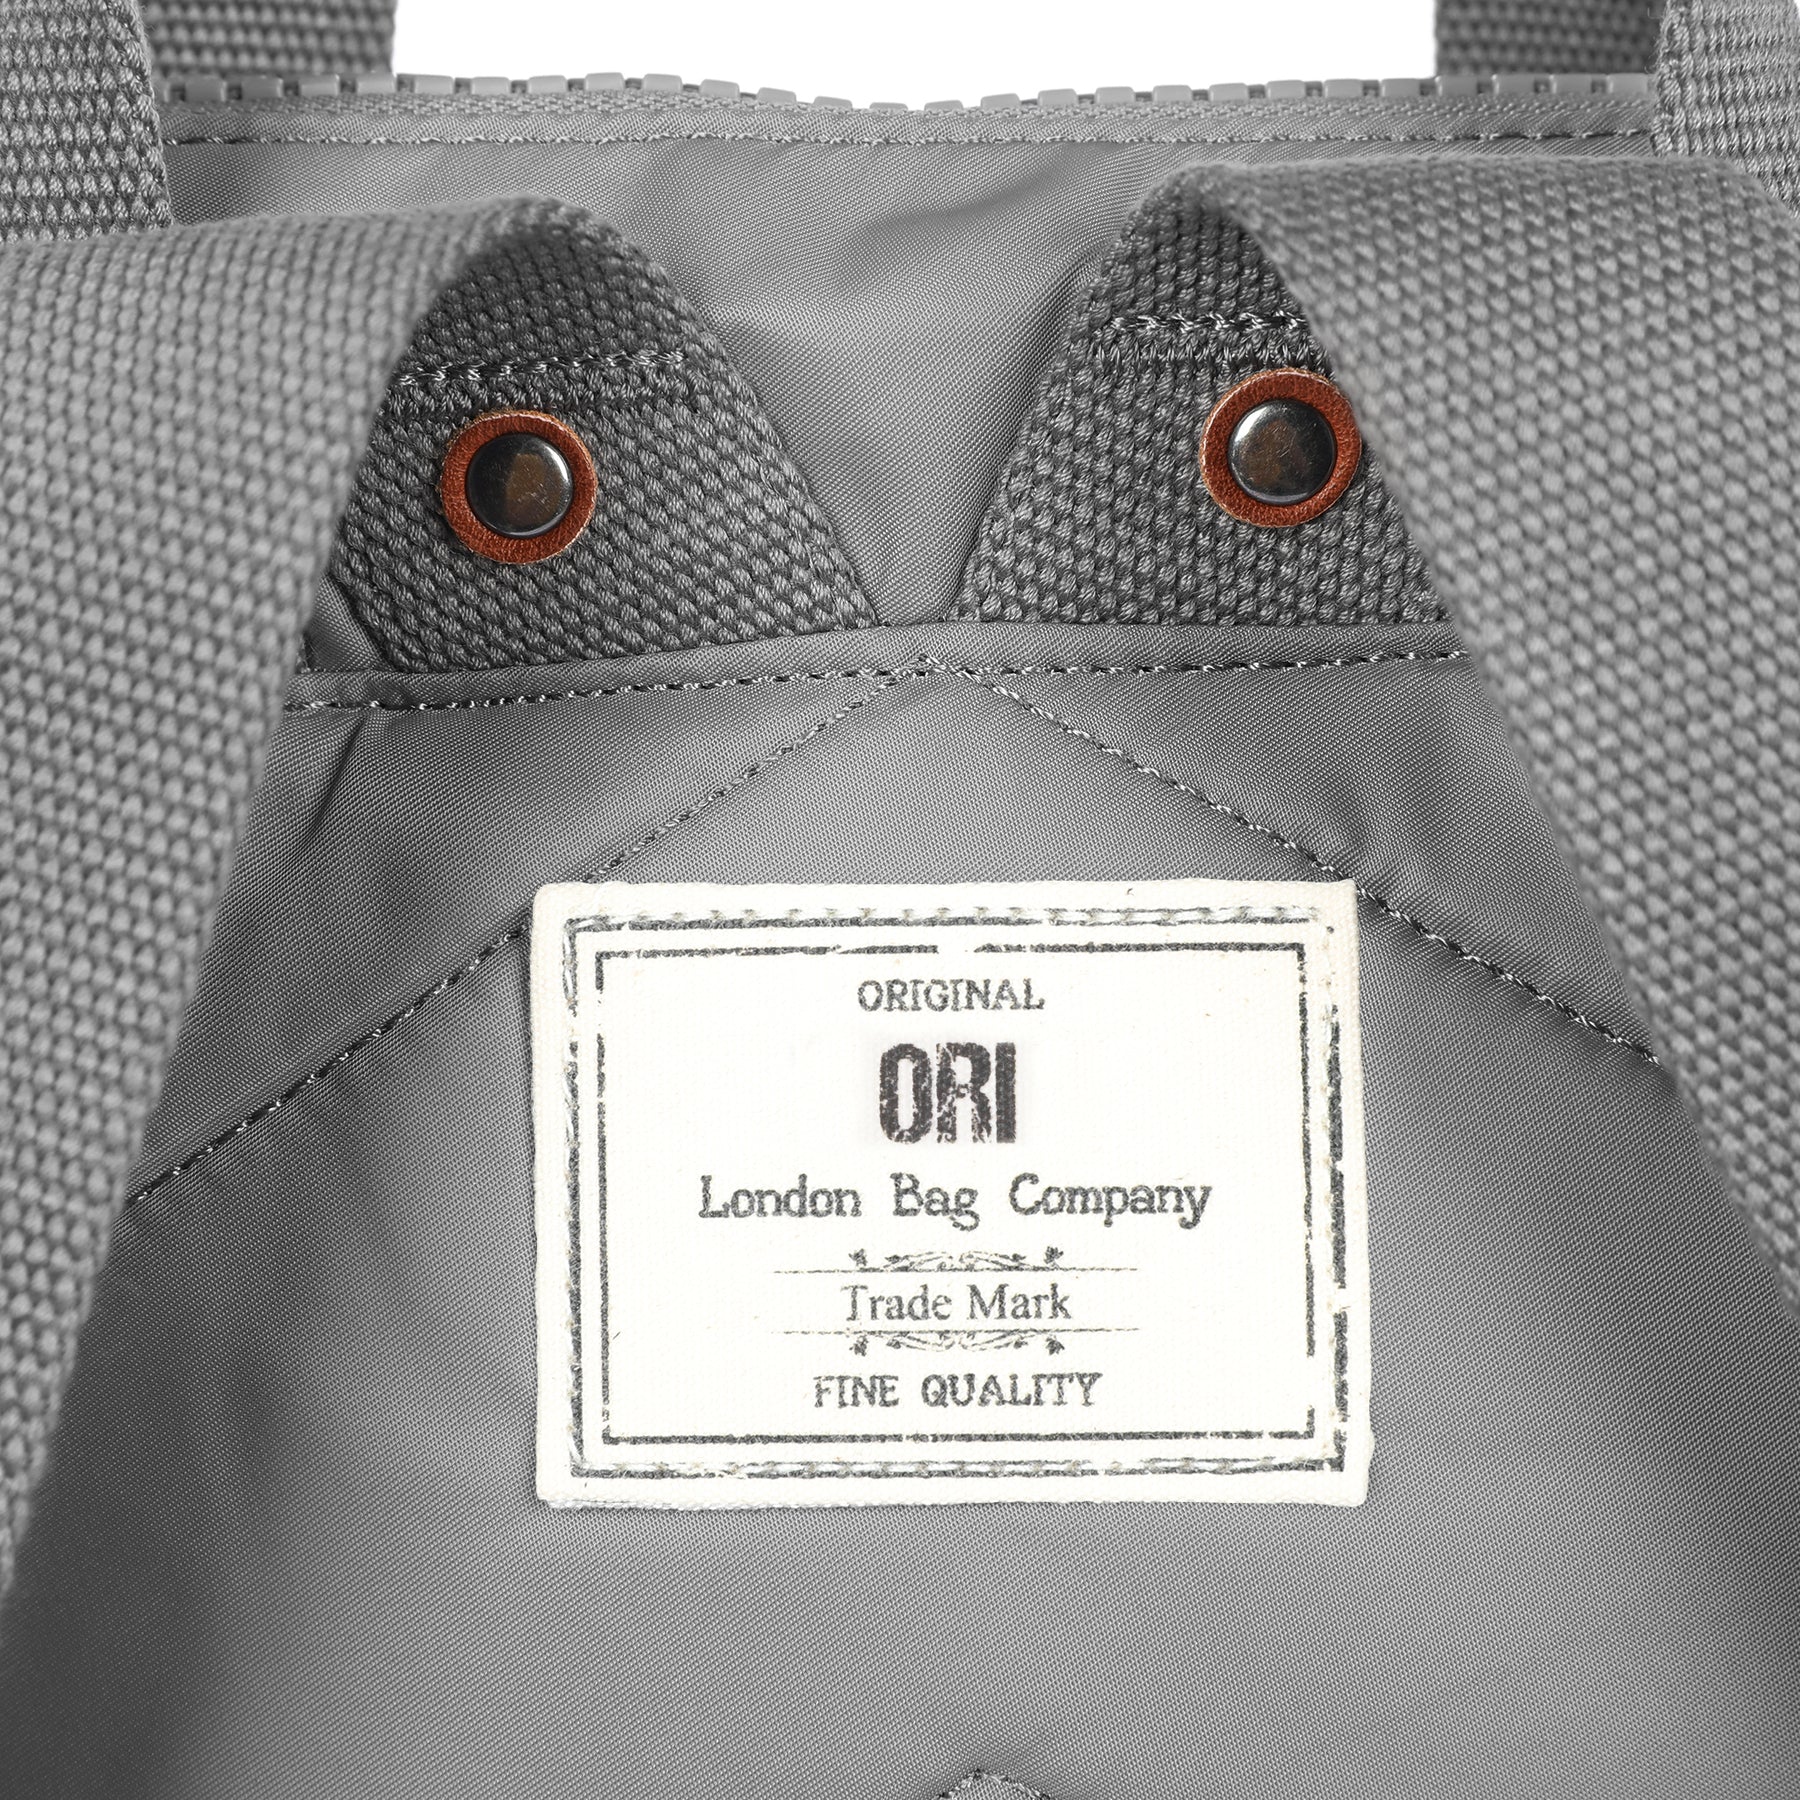 ORI Bantry B Sustainable Nylon Backpack – Medium – Stormy